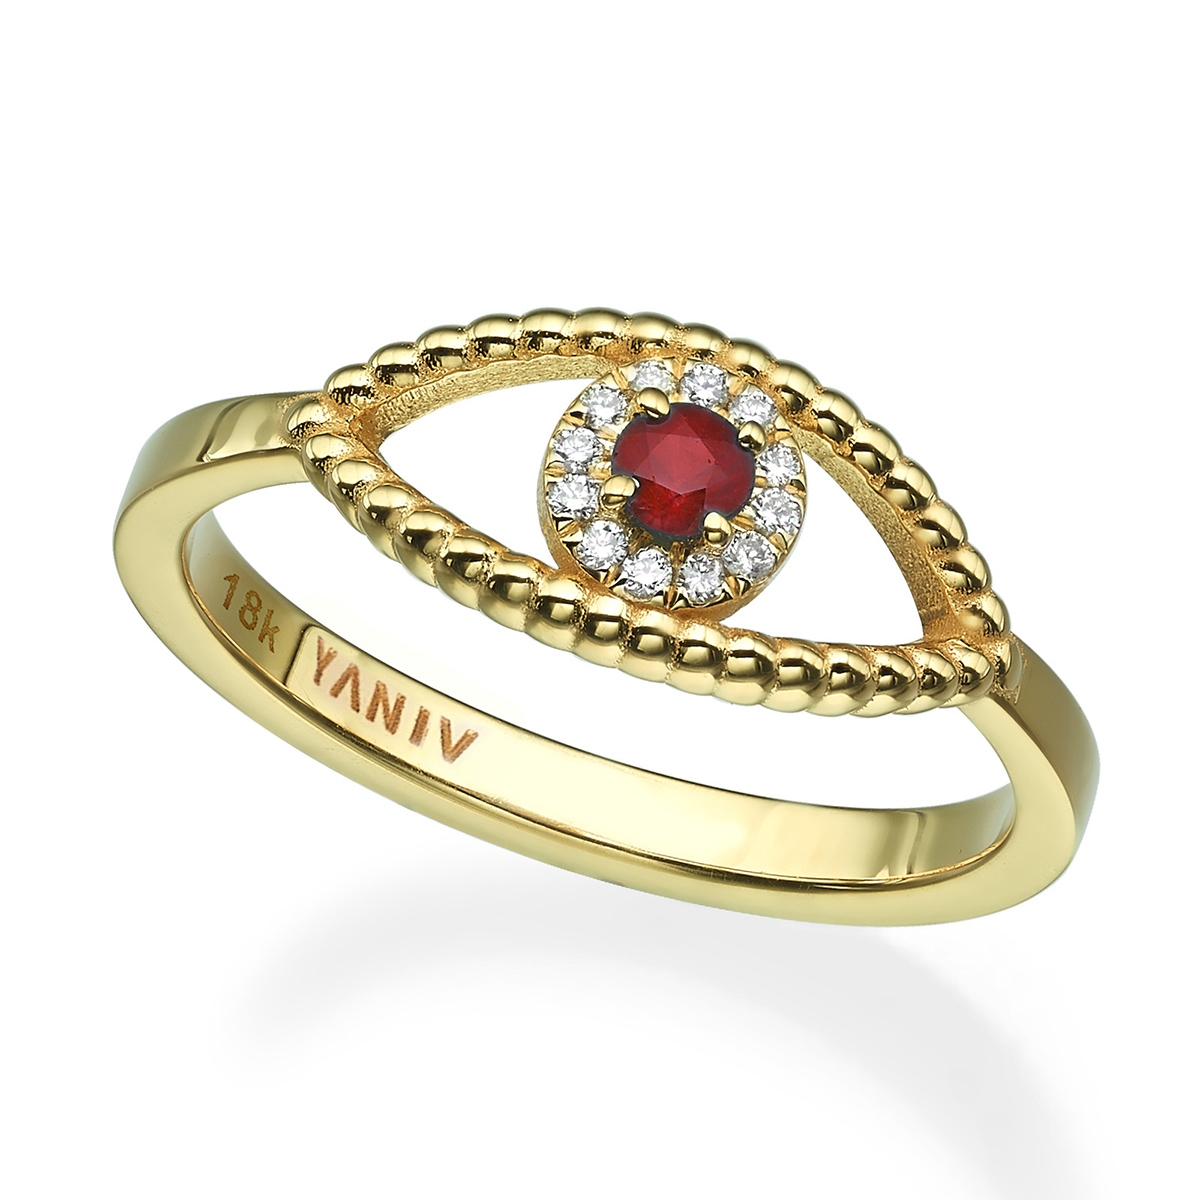 Yaniv Fine Jewelry 18K Gold Evil Eye Ring with Ruby Stone